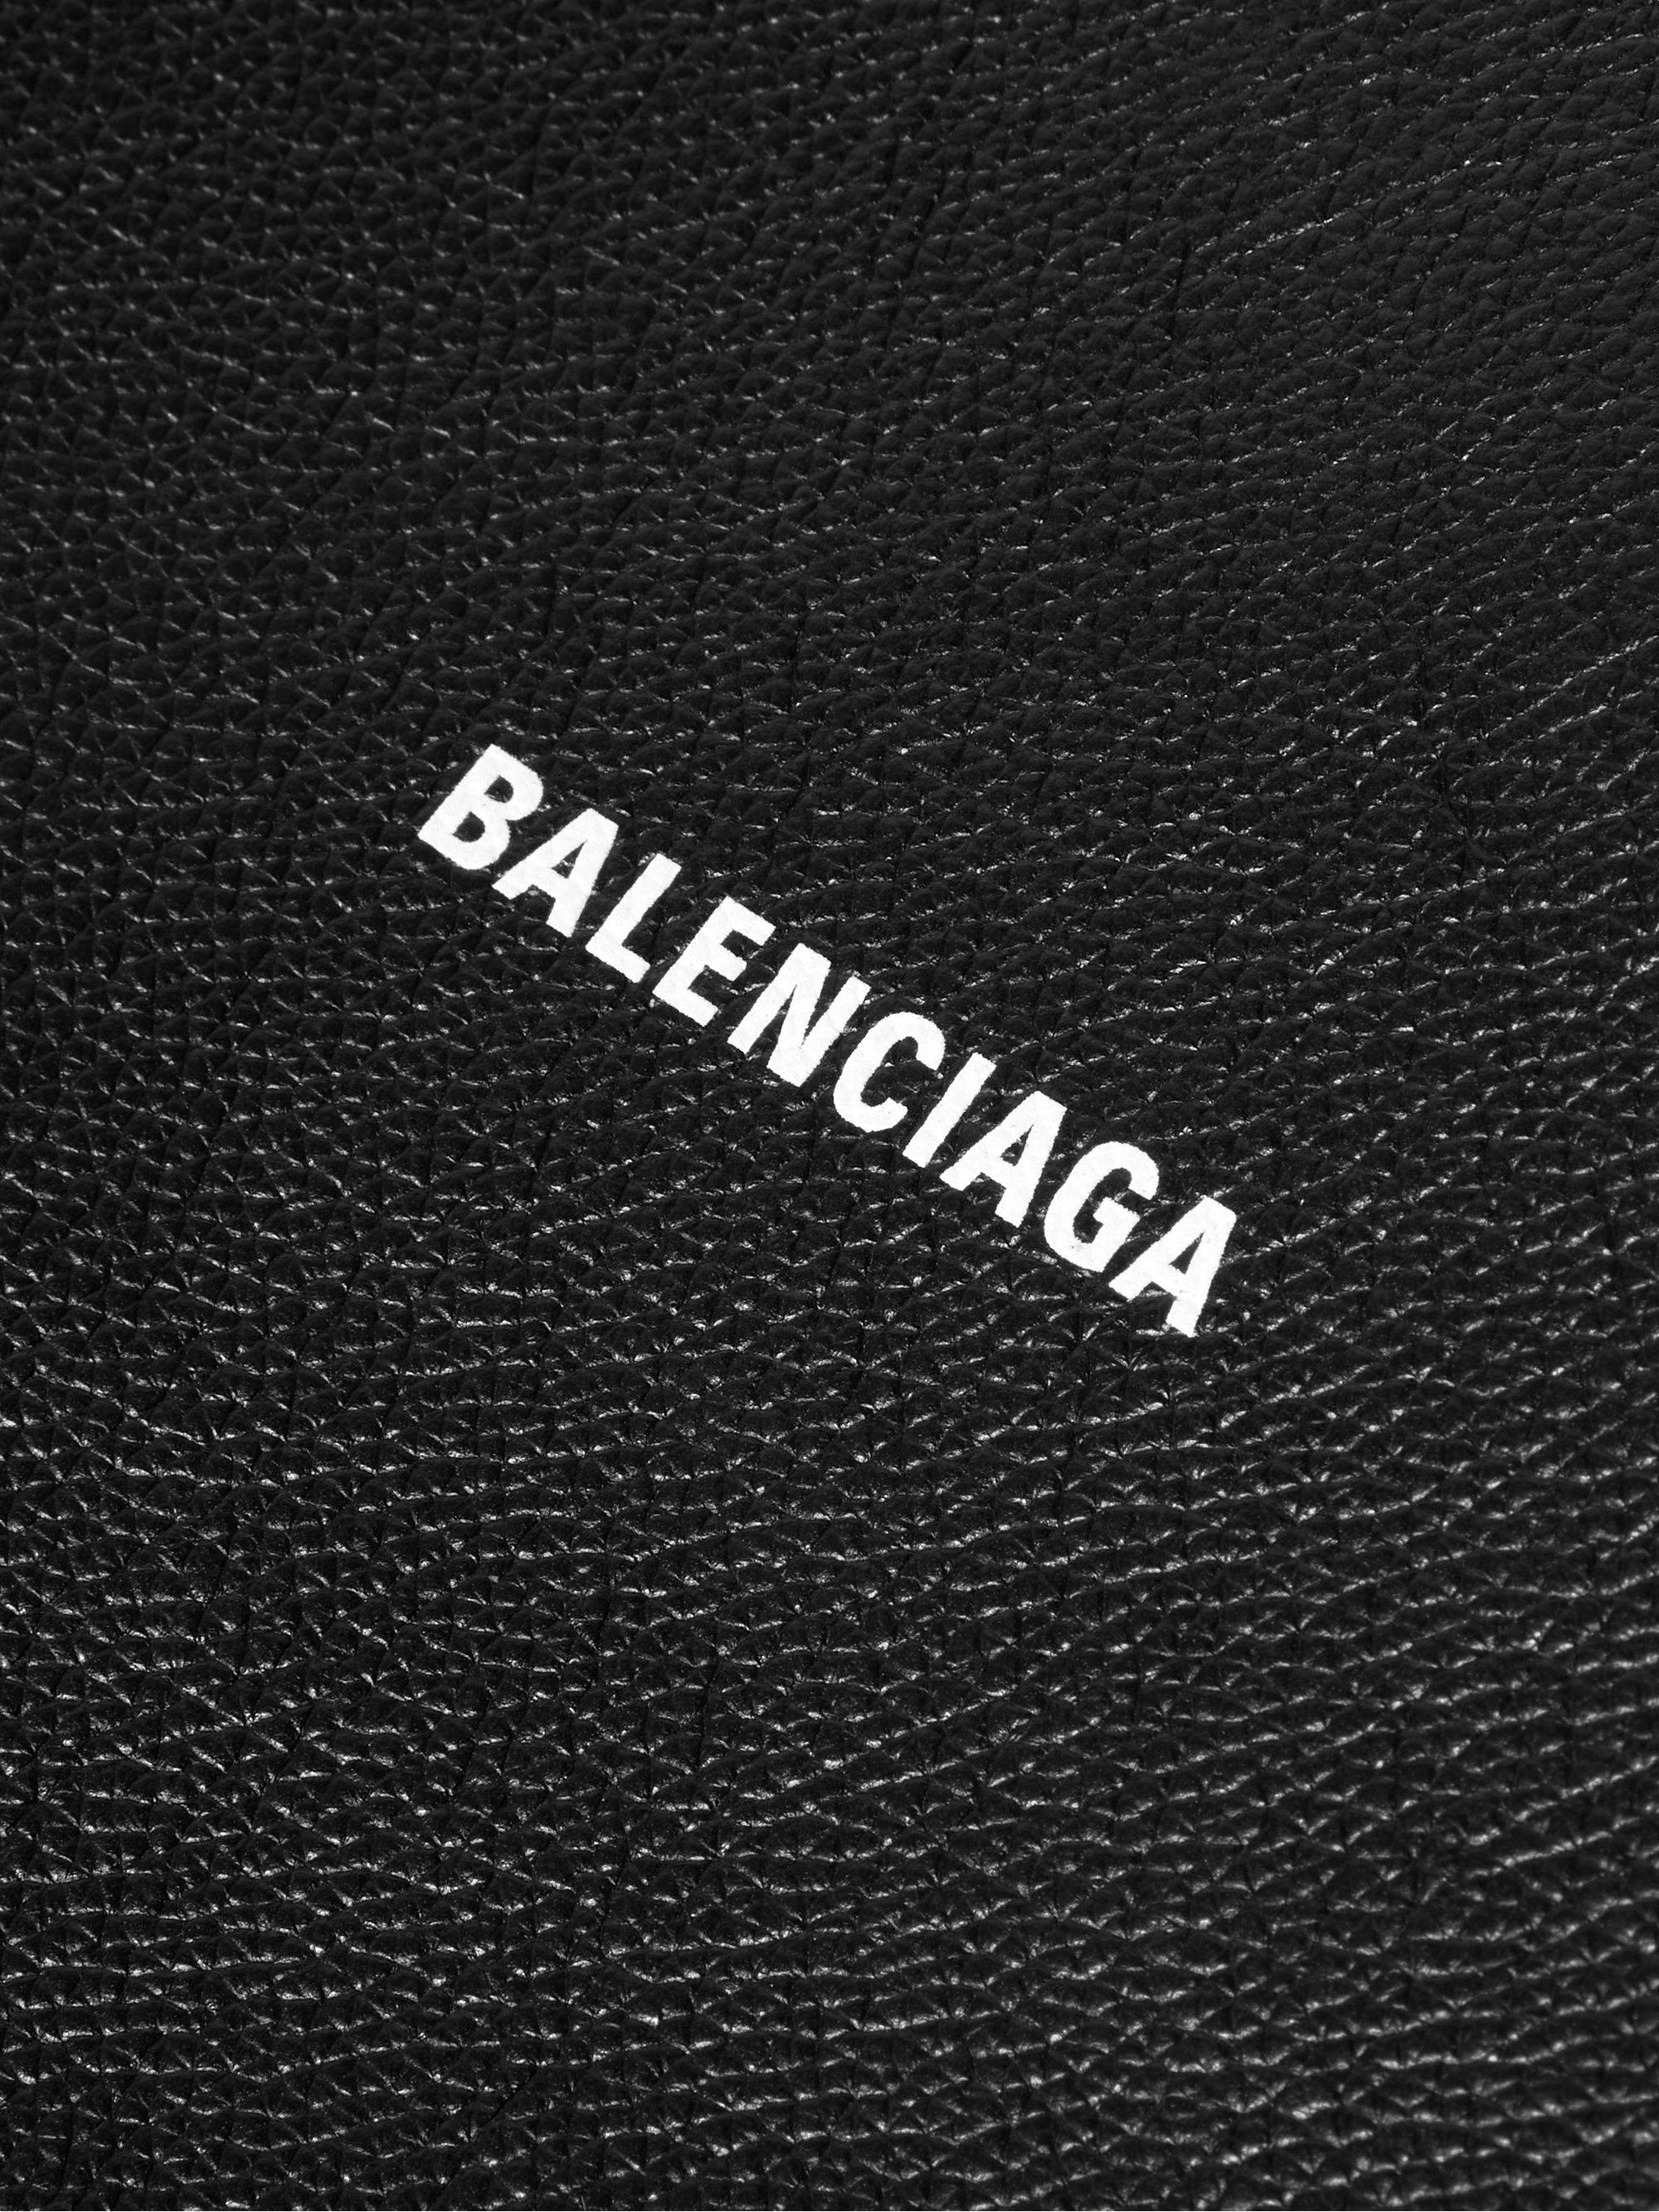 Download Balenciaga Logo On Leather Wallpaper | Wallpapers.com